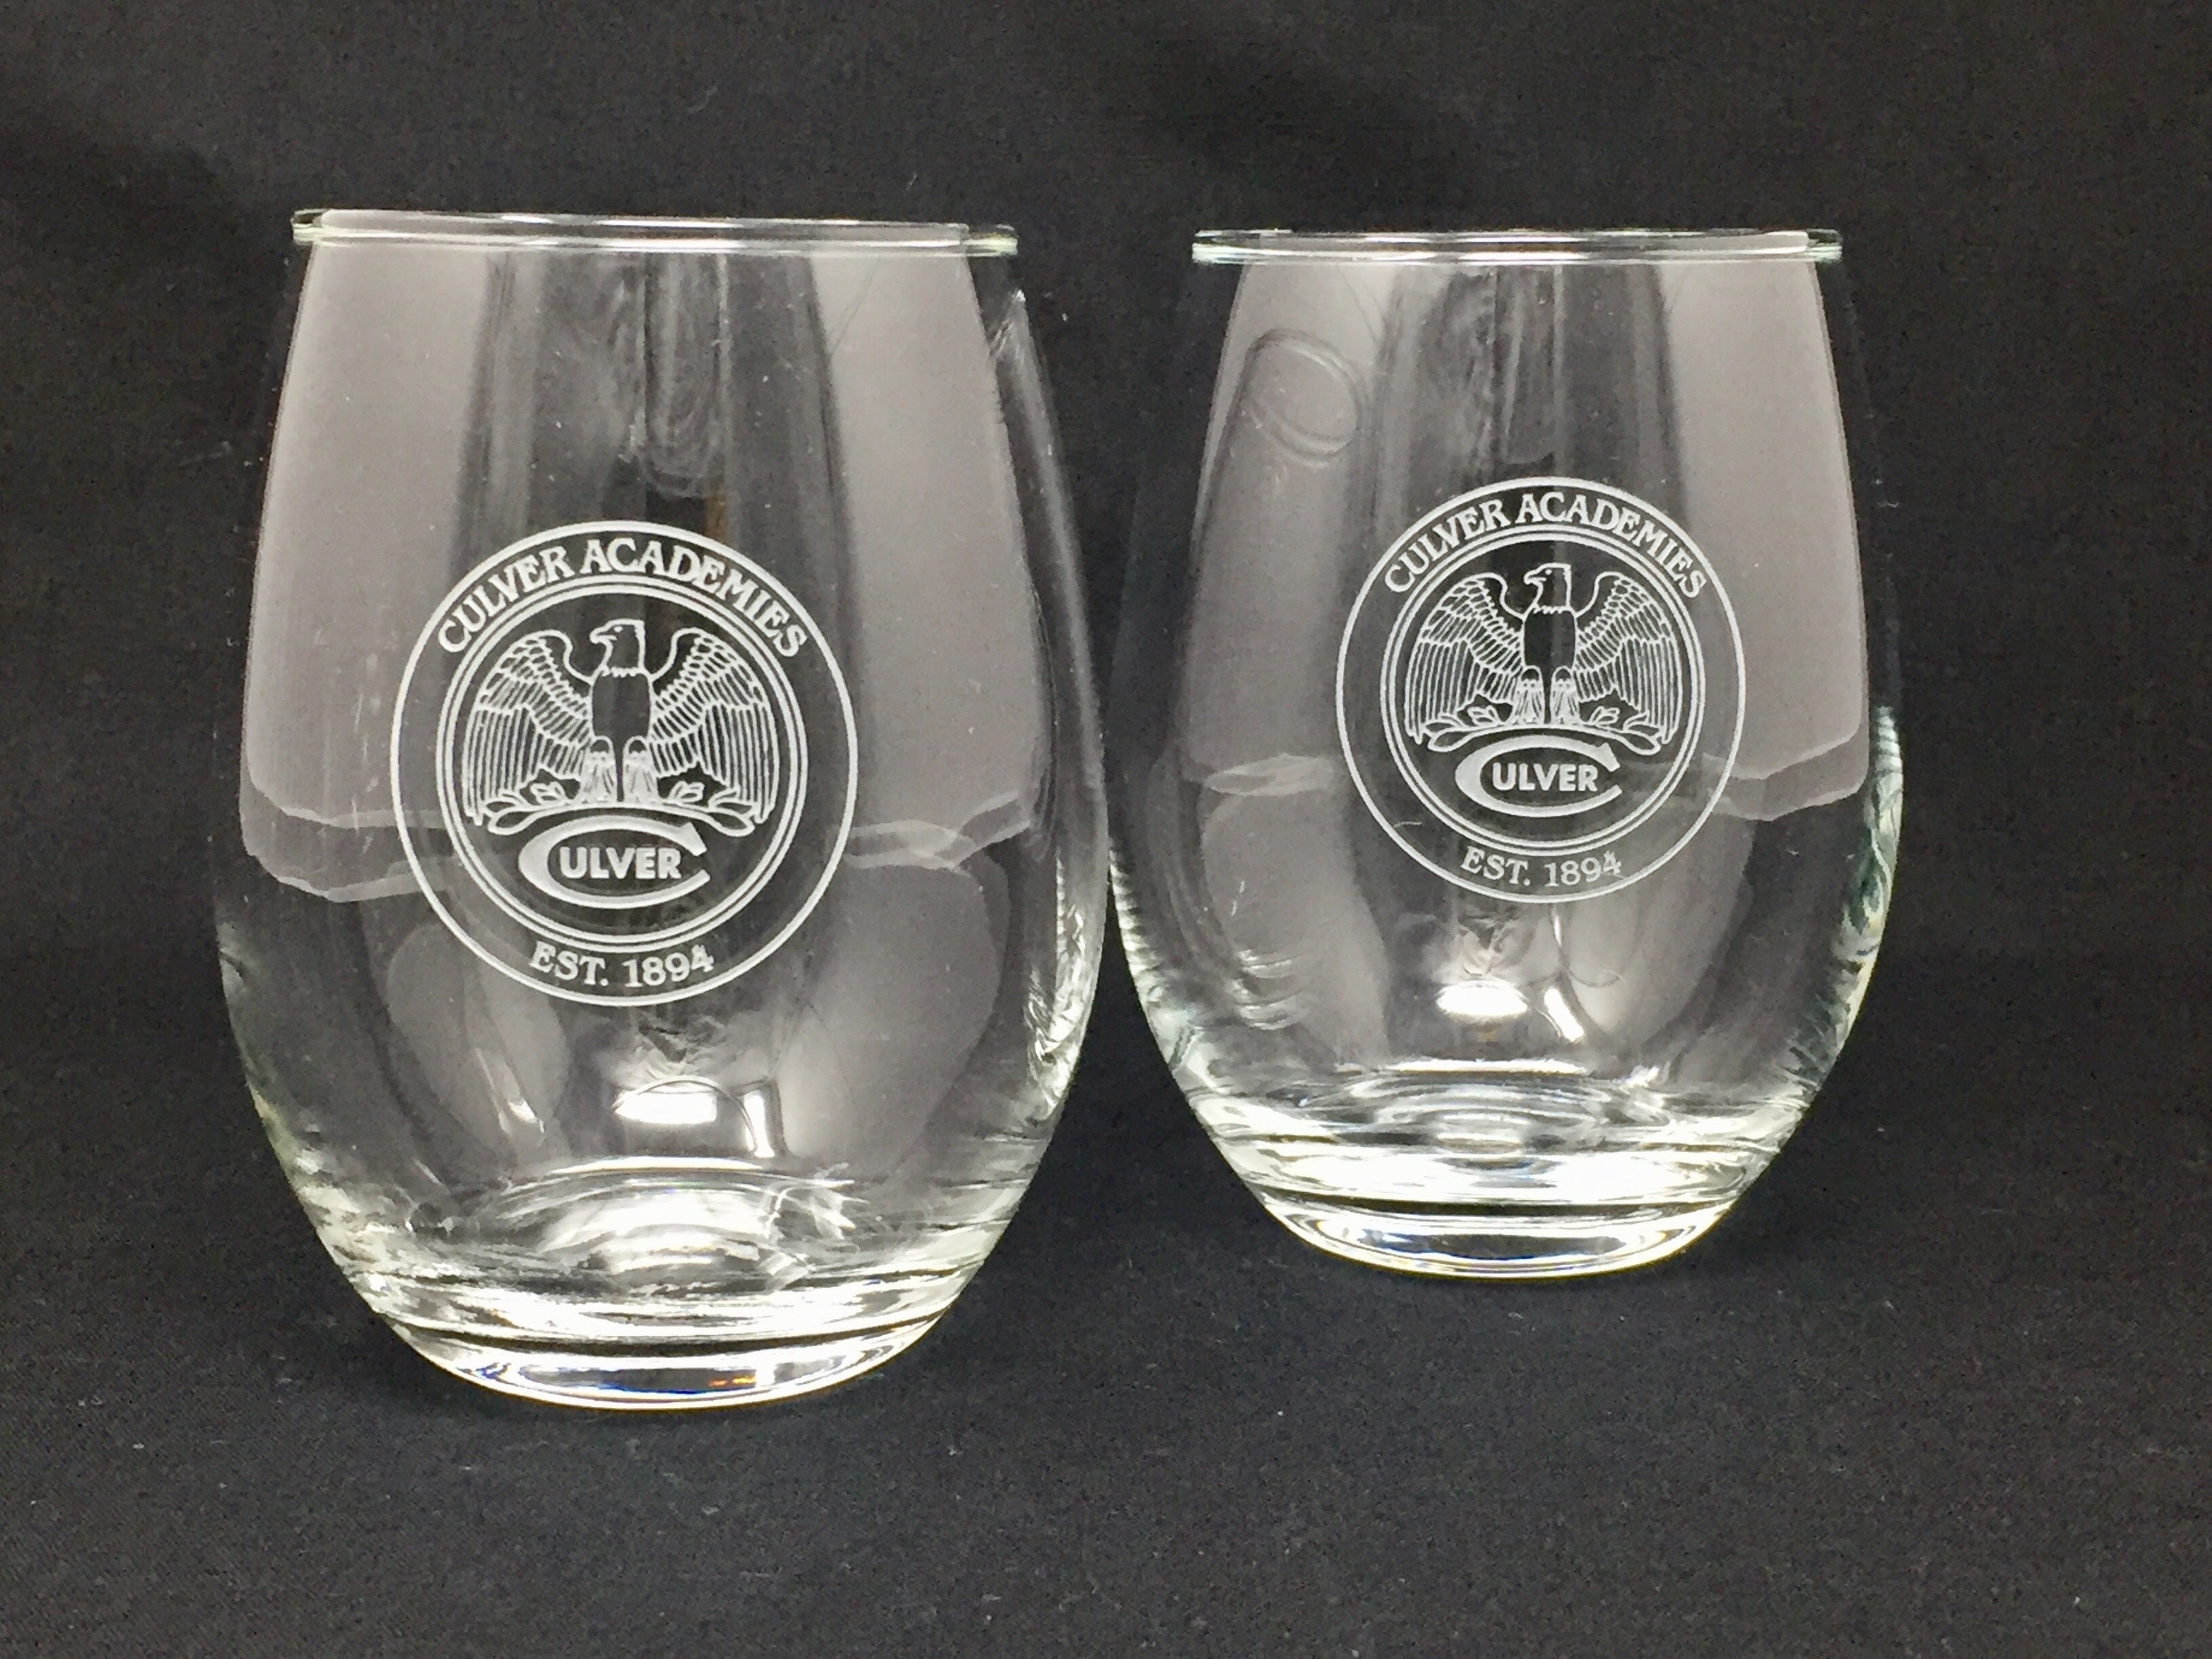 Culver Academies Stemless Wine Glasses Set of 2 - 21oz